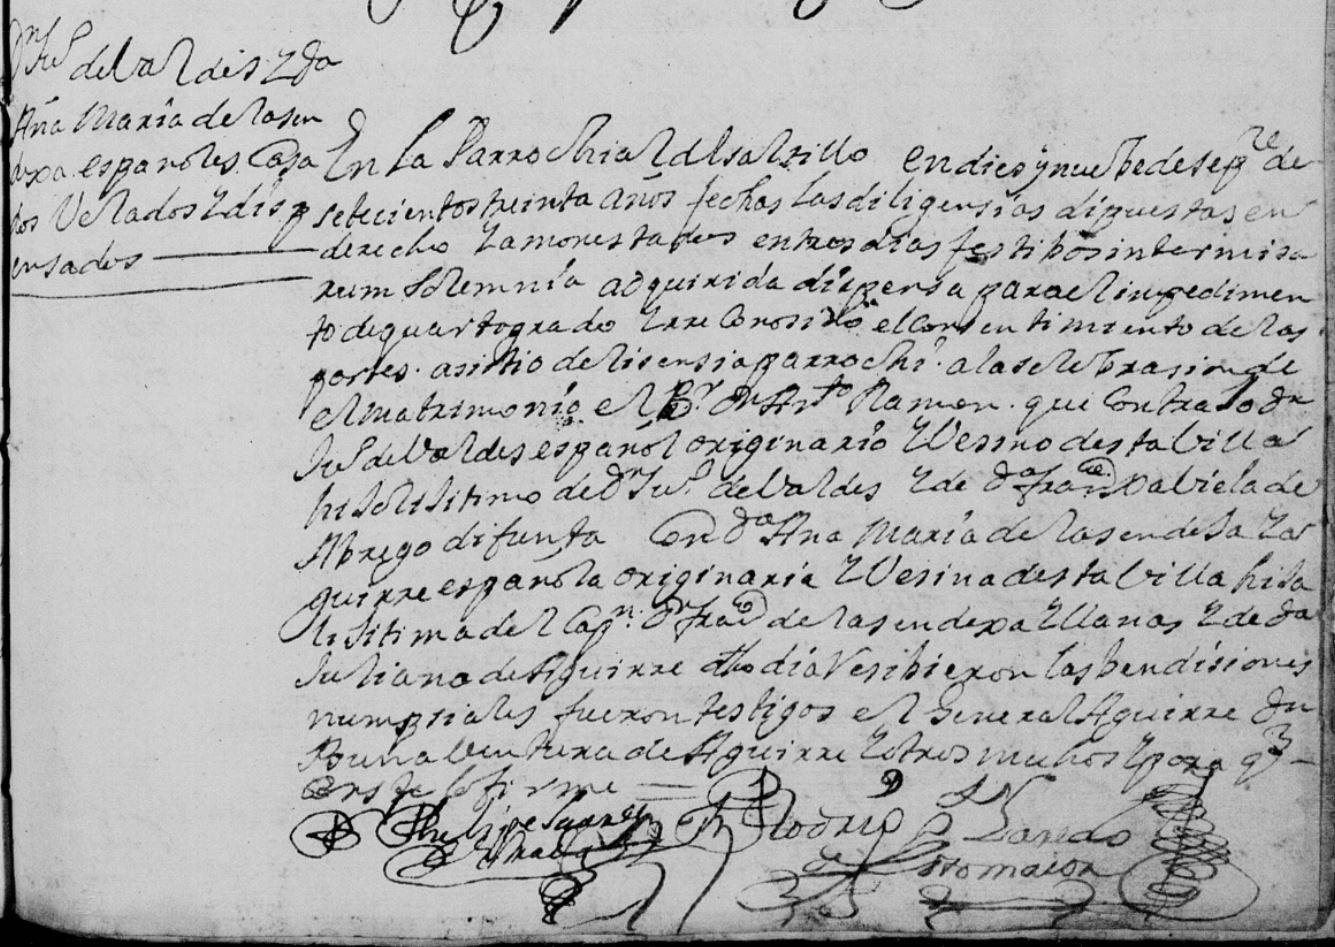 Juan Valdez Abrego and Ana Maria Sendeja Llanas FamilySearch, Saltillo, Coahuila, Mexico 1730 Pg. 180